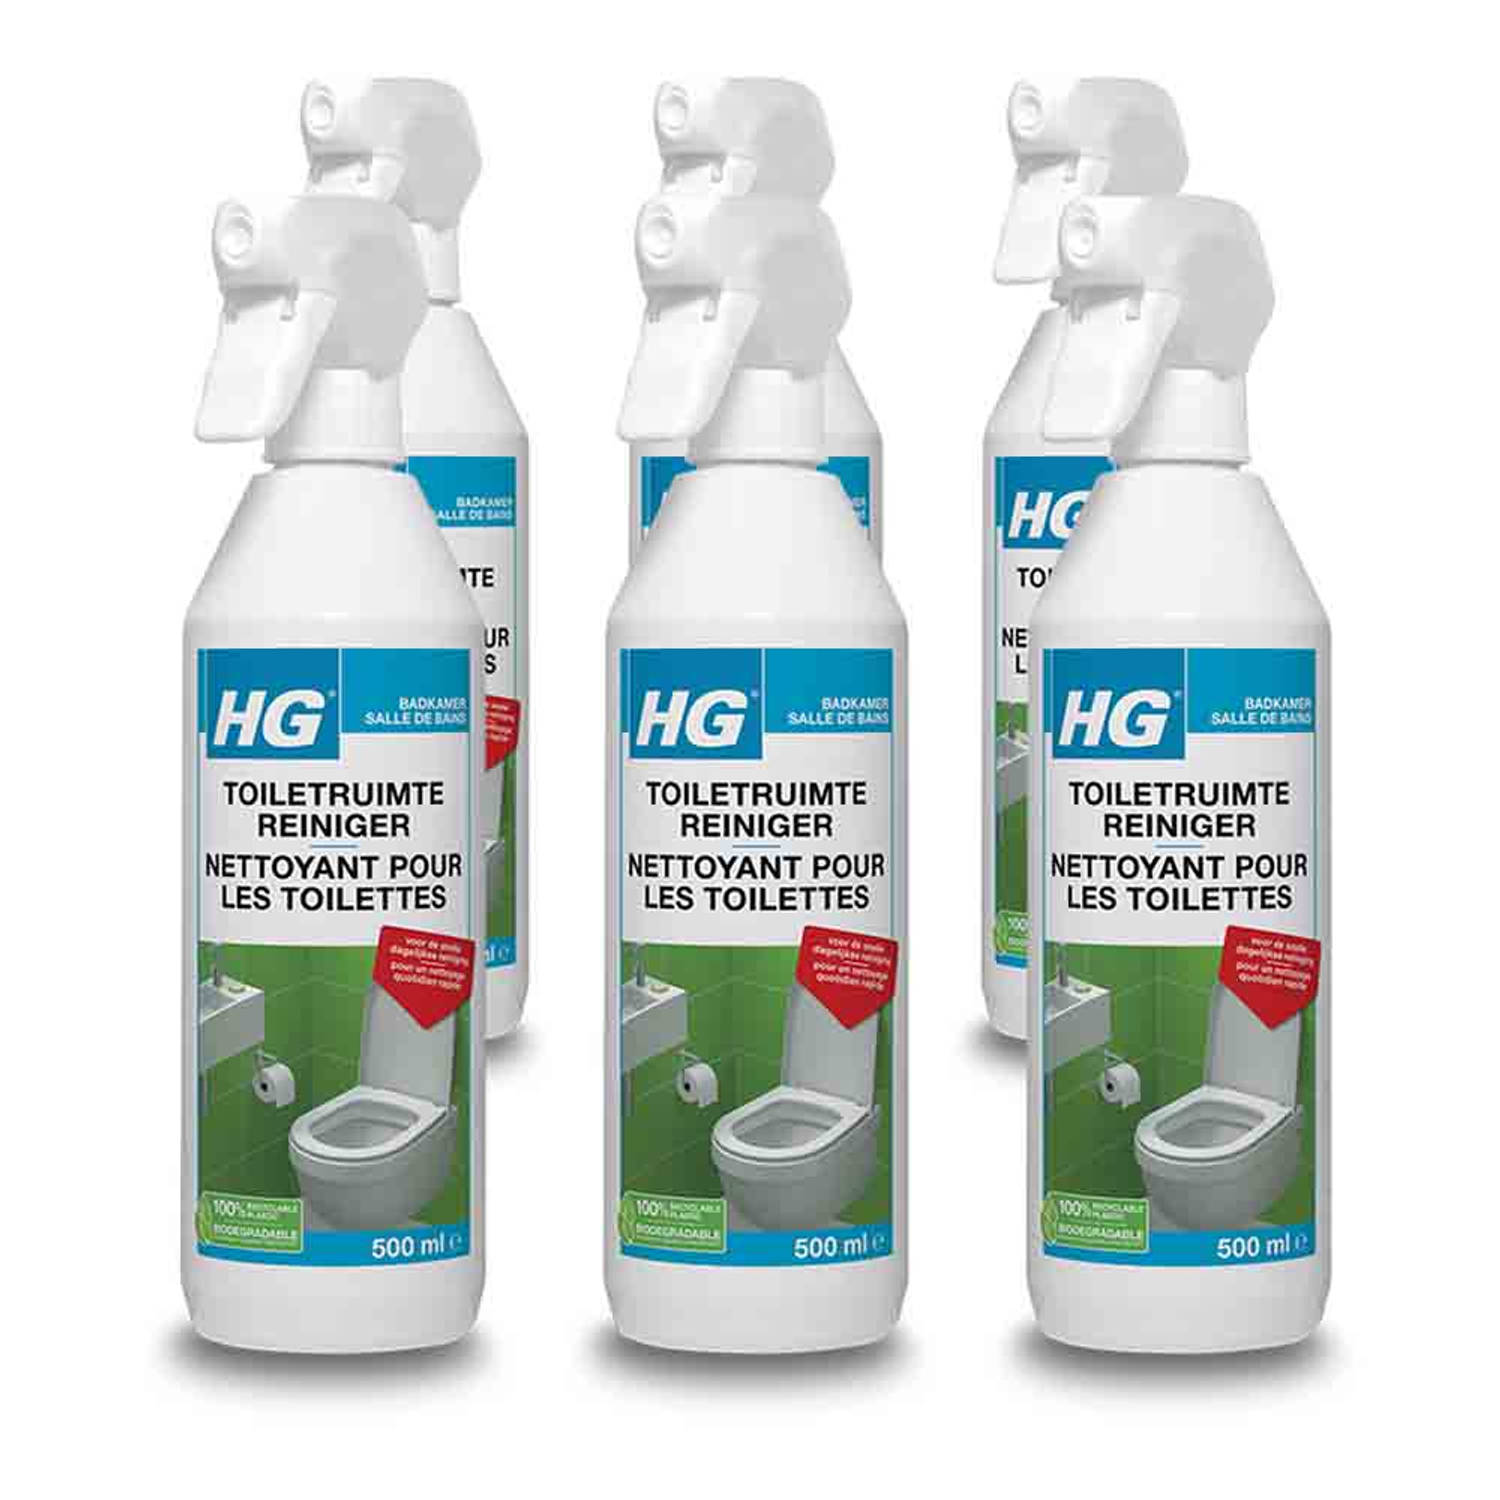 HG toiletruimte reiniger 500 ml - 6 stuks